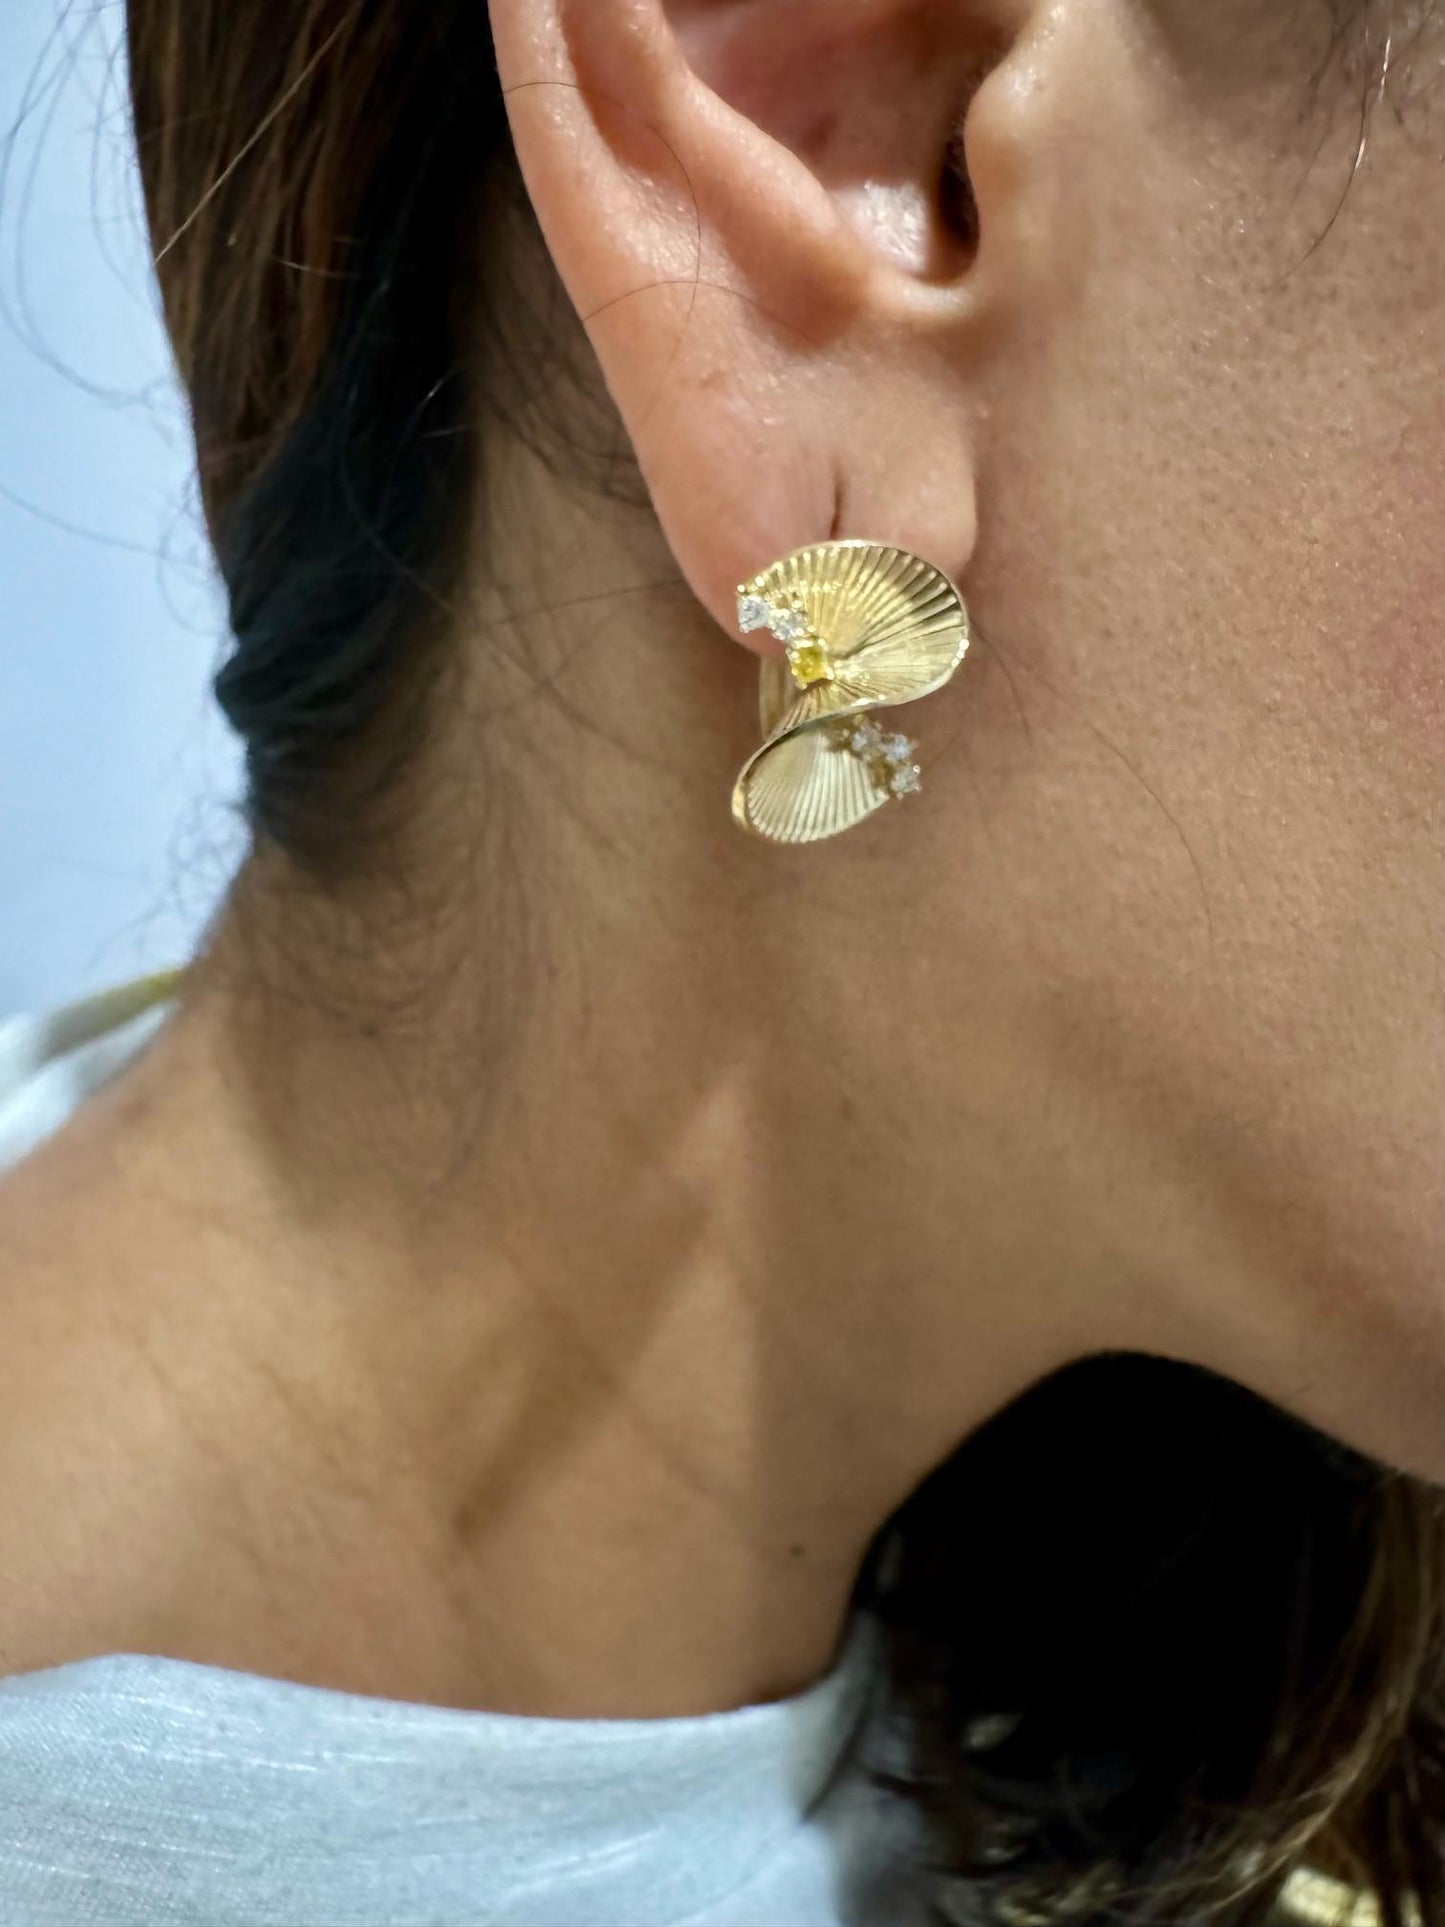 0.34 Carat Diamond Yellow Gold Art Deco Inspired Earrings